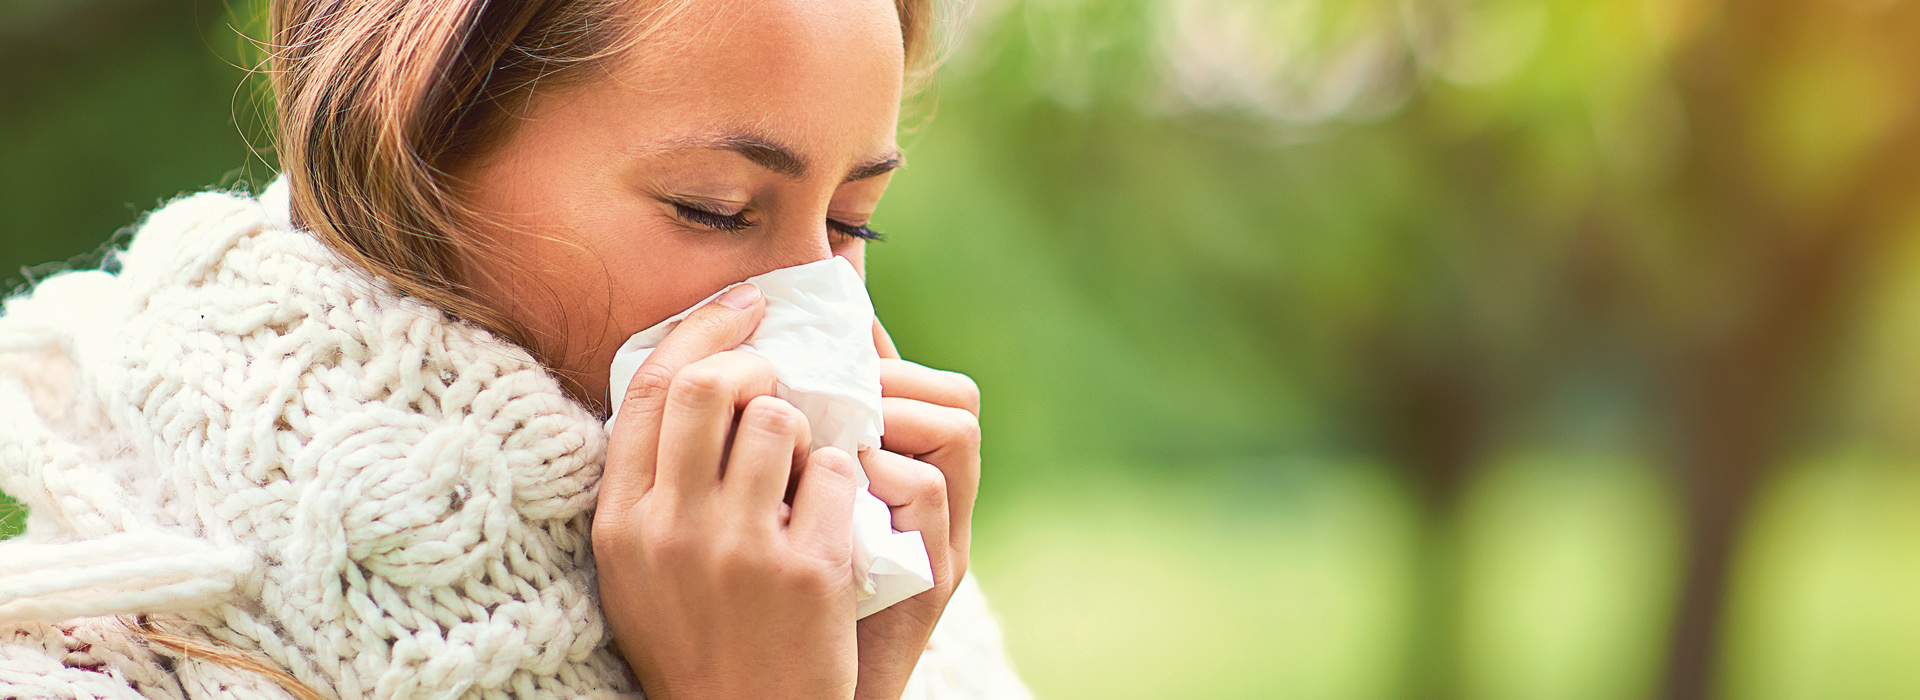 Allergy, pollen, woman, hay fever, common cold, pollen season, sneezing, headache, symptoms